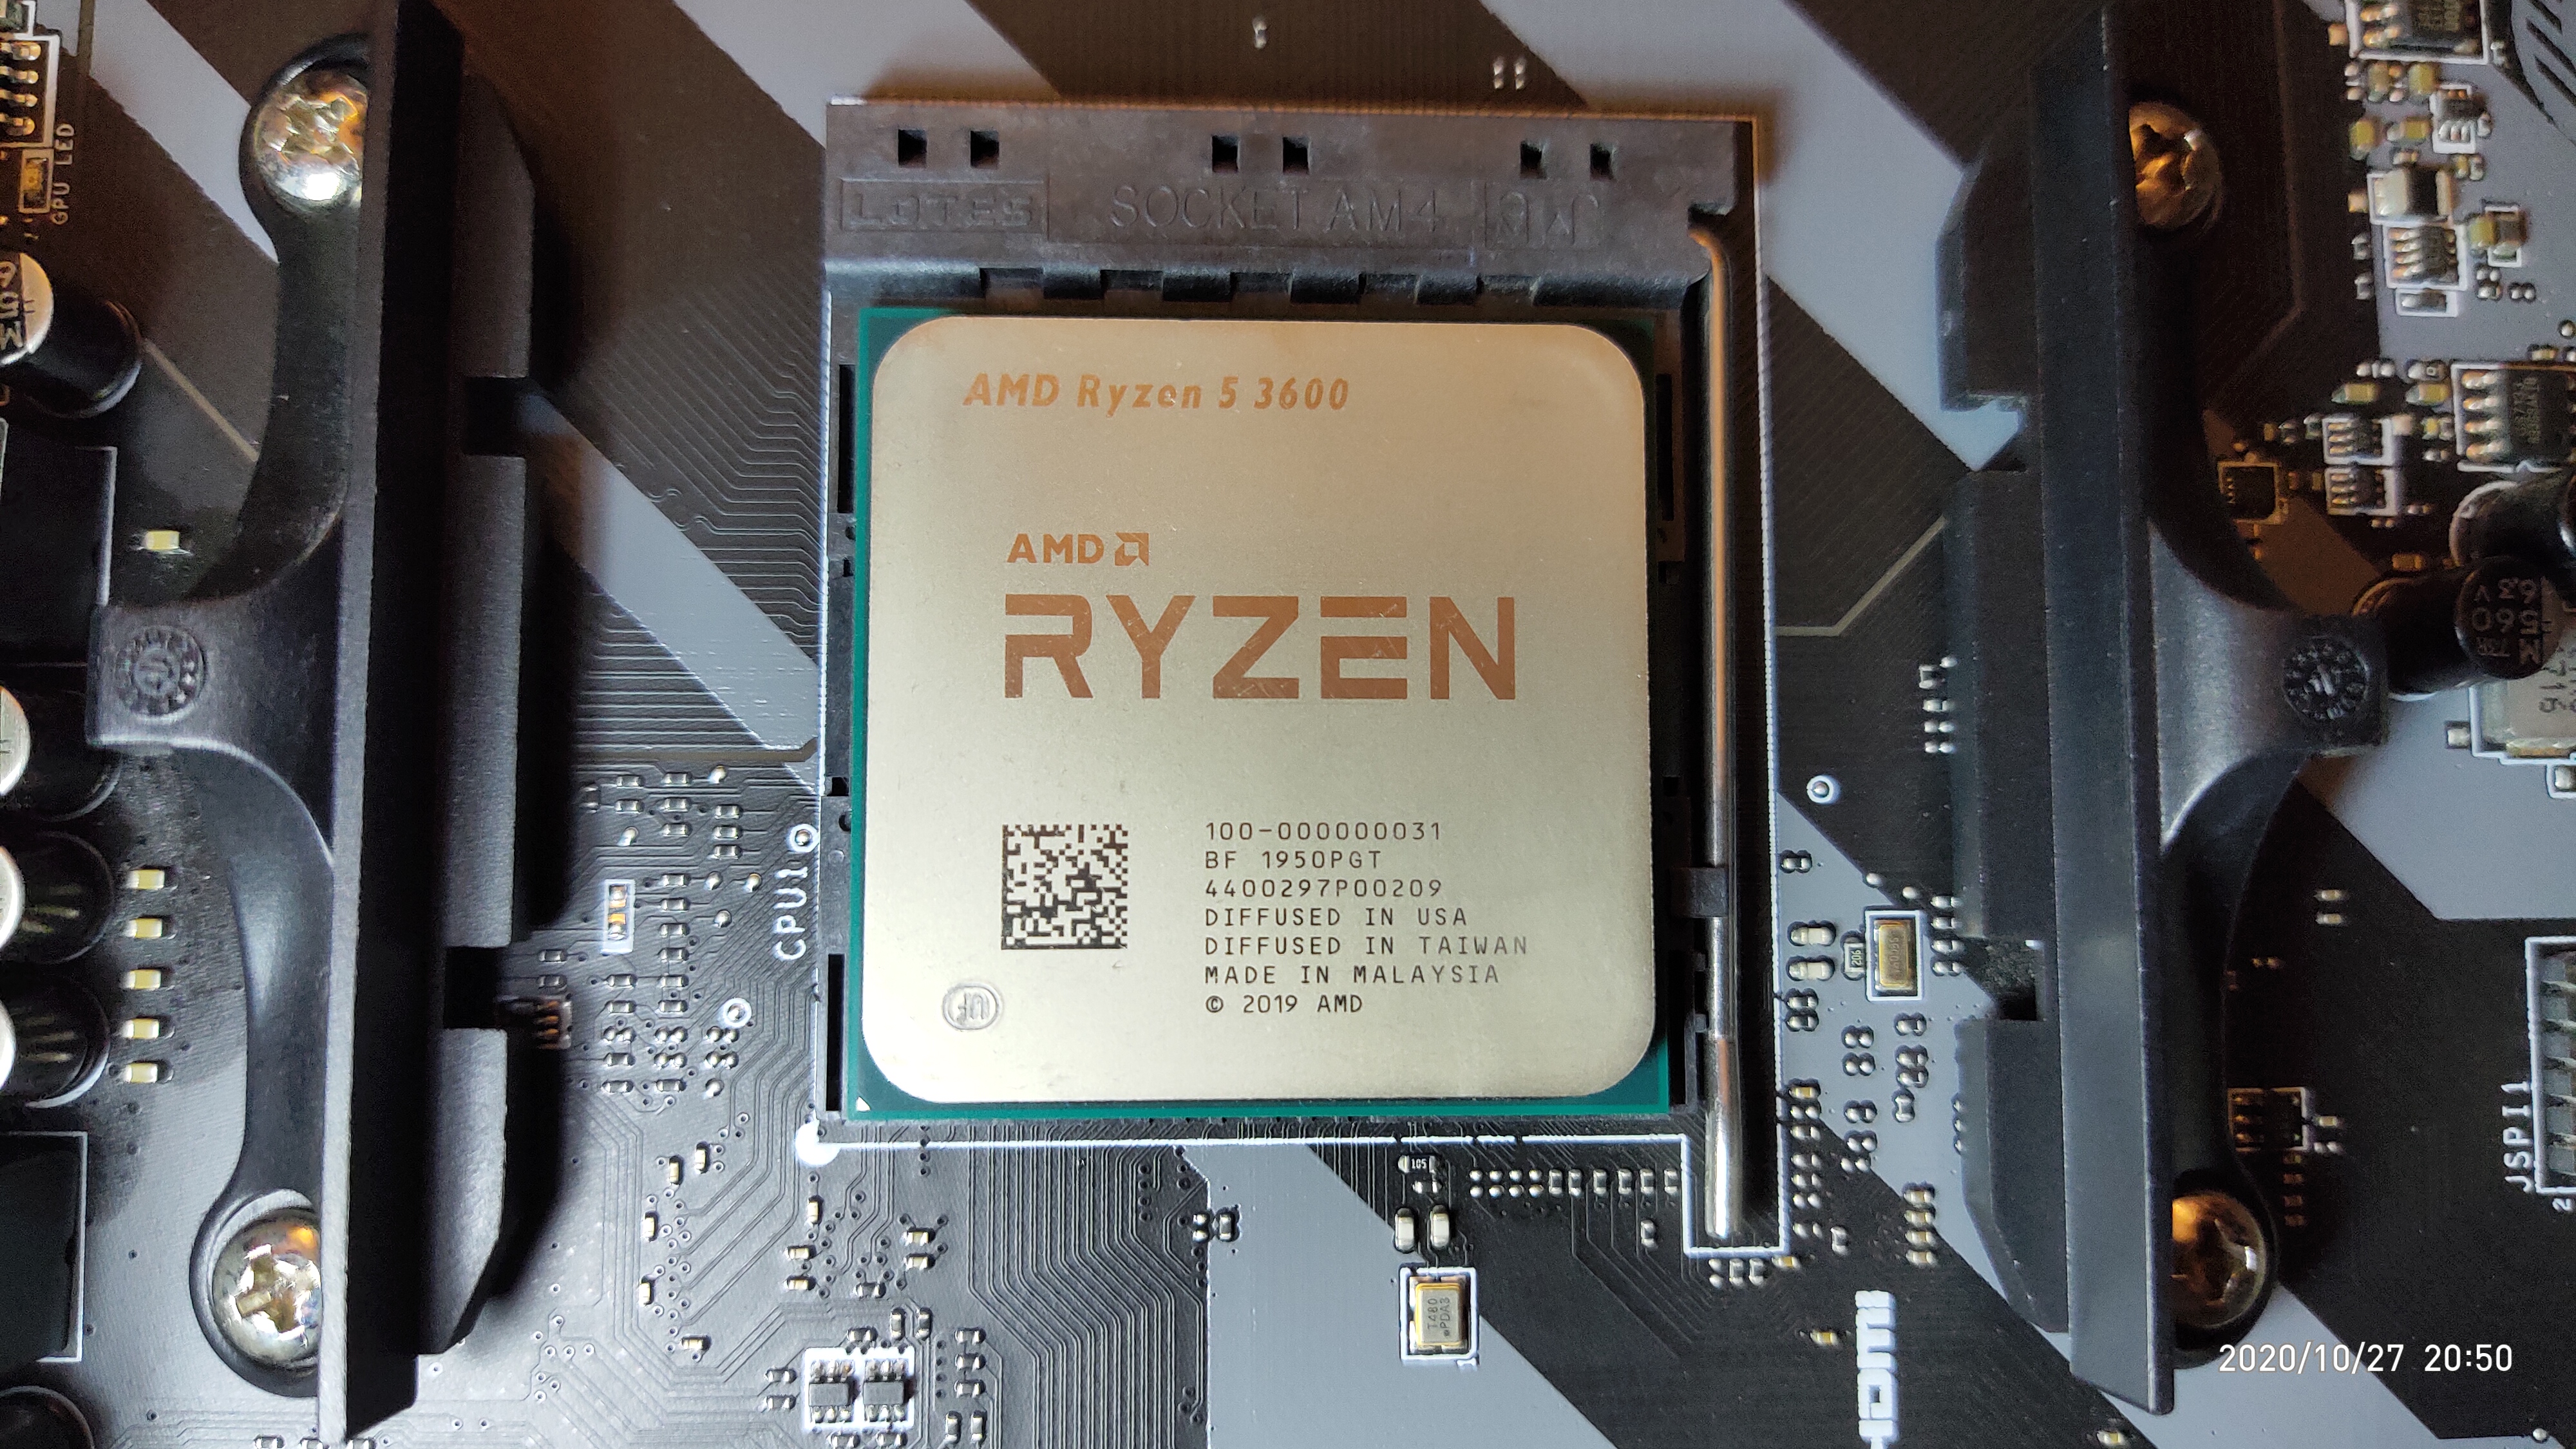 5 3600 сокет. AMD Ryzen 5 3600 OEM. Процессор AMD Ryzen r5-3600. Процессор AMD Ryzen 5 3600 Box. AMD Ryzen 5 3600 Socket am4.